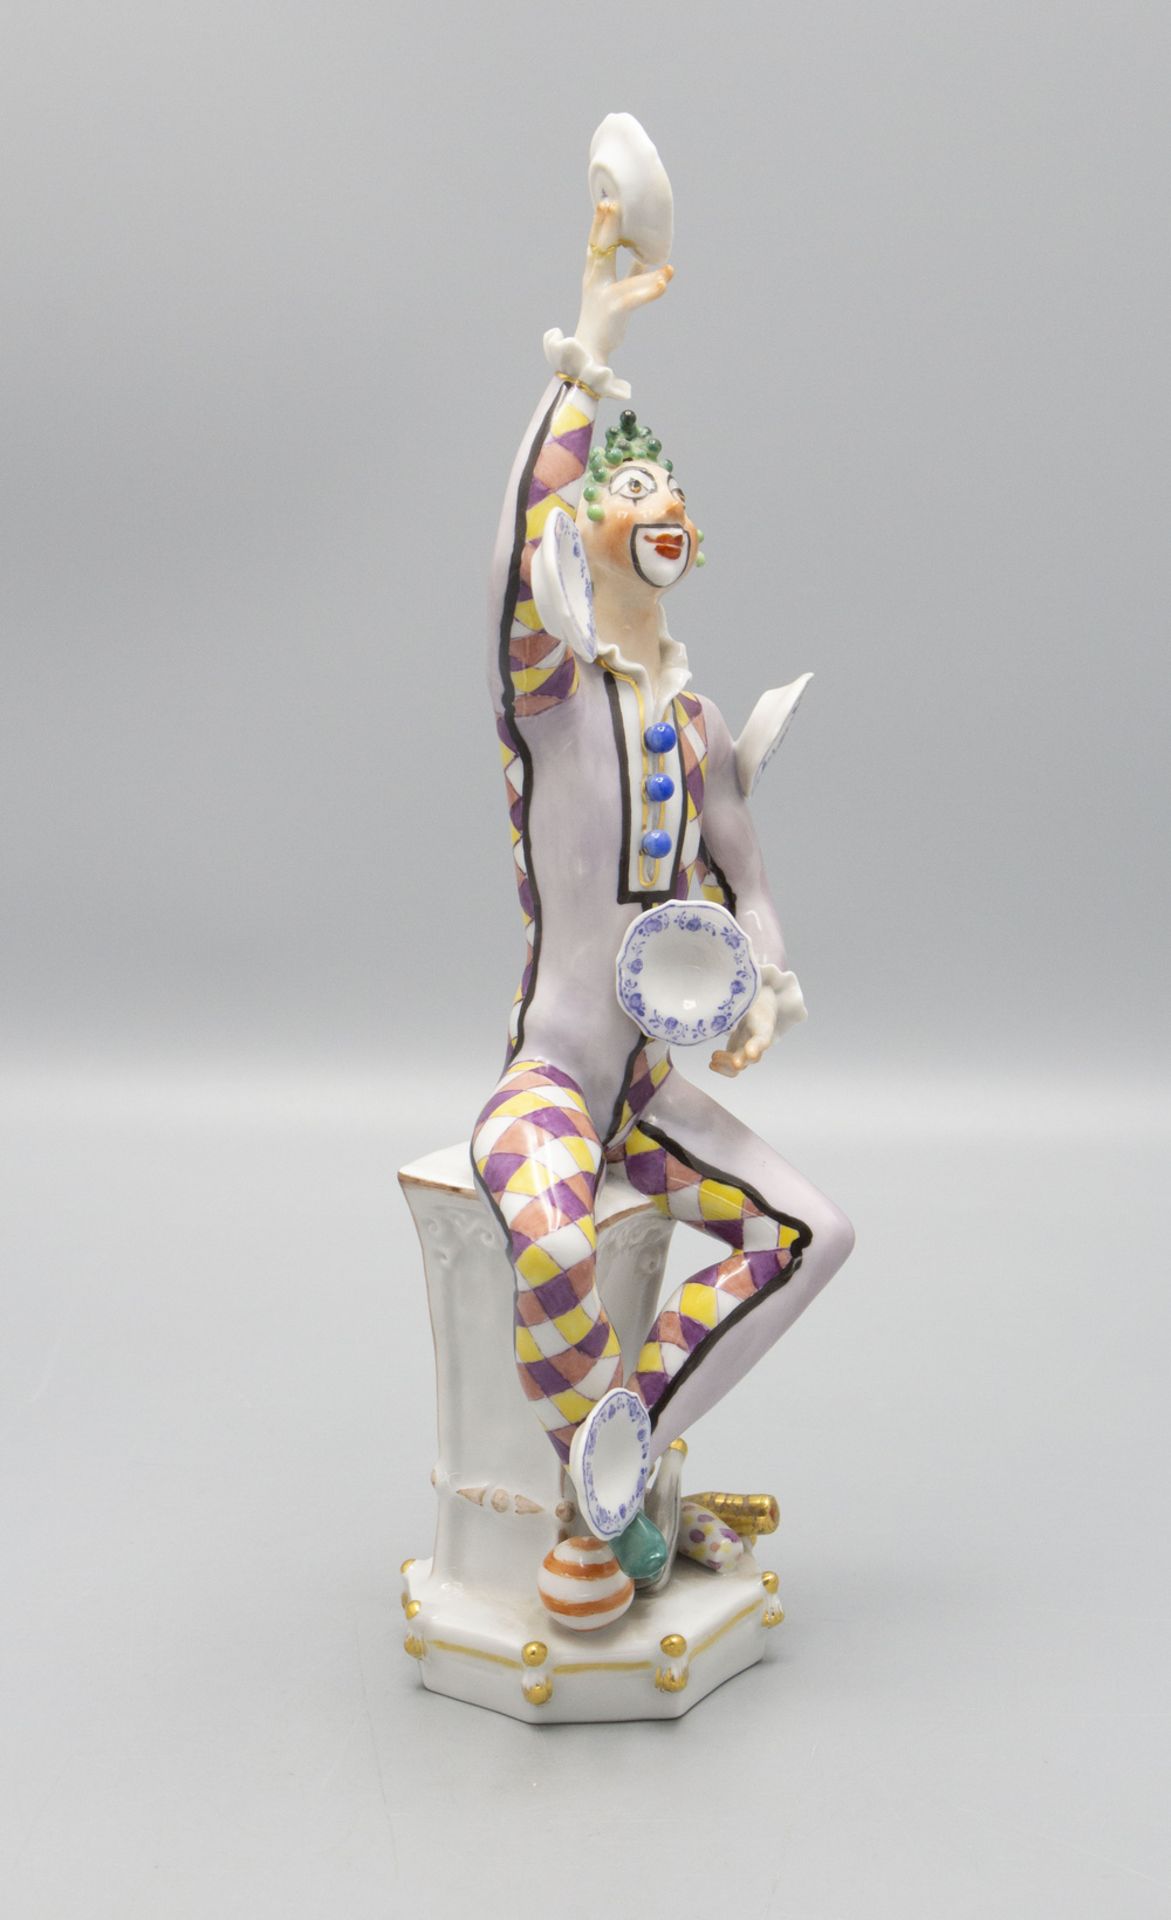 Porzellanfigur 'Der Jongleur' / A porcelain figurine 'The Juggler', Meissen, 1976 - Image 4 of 5